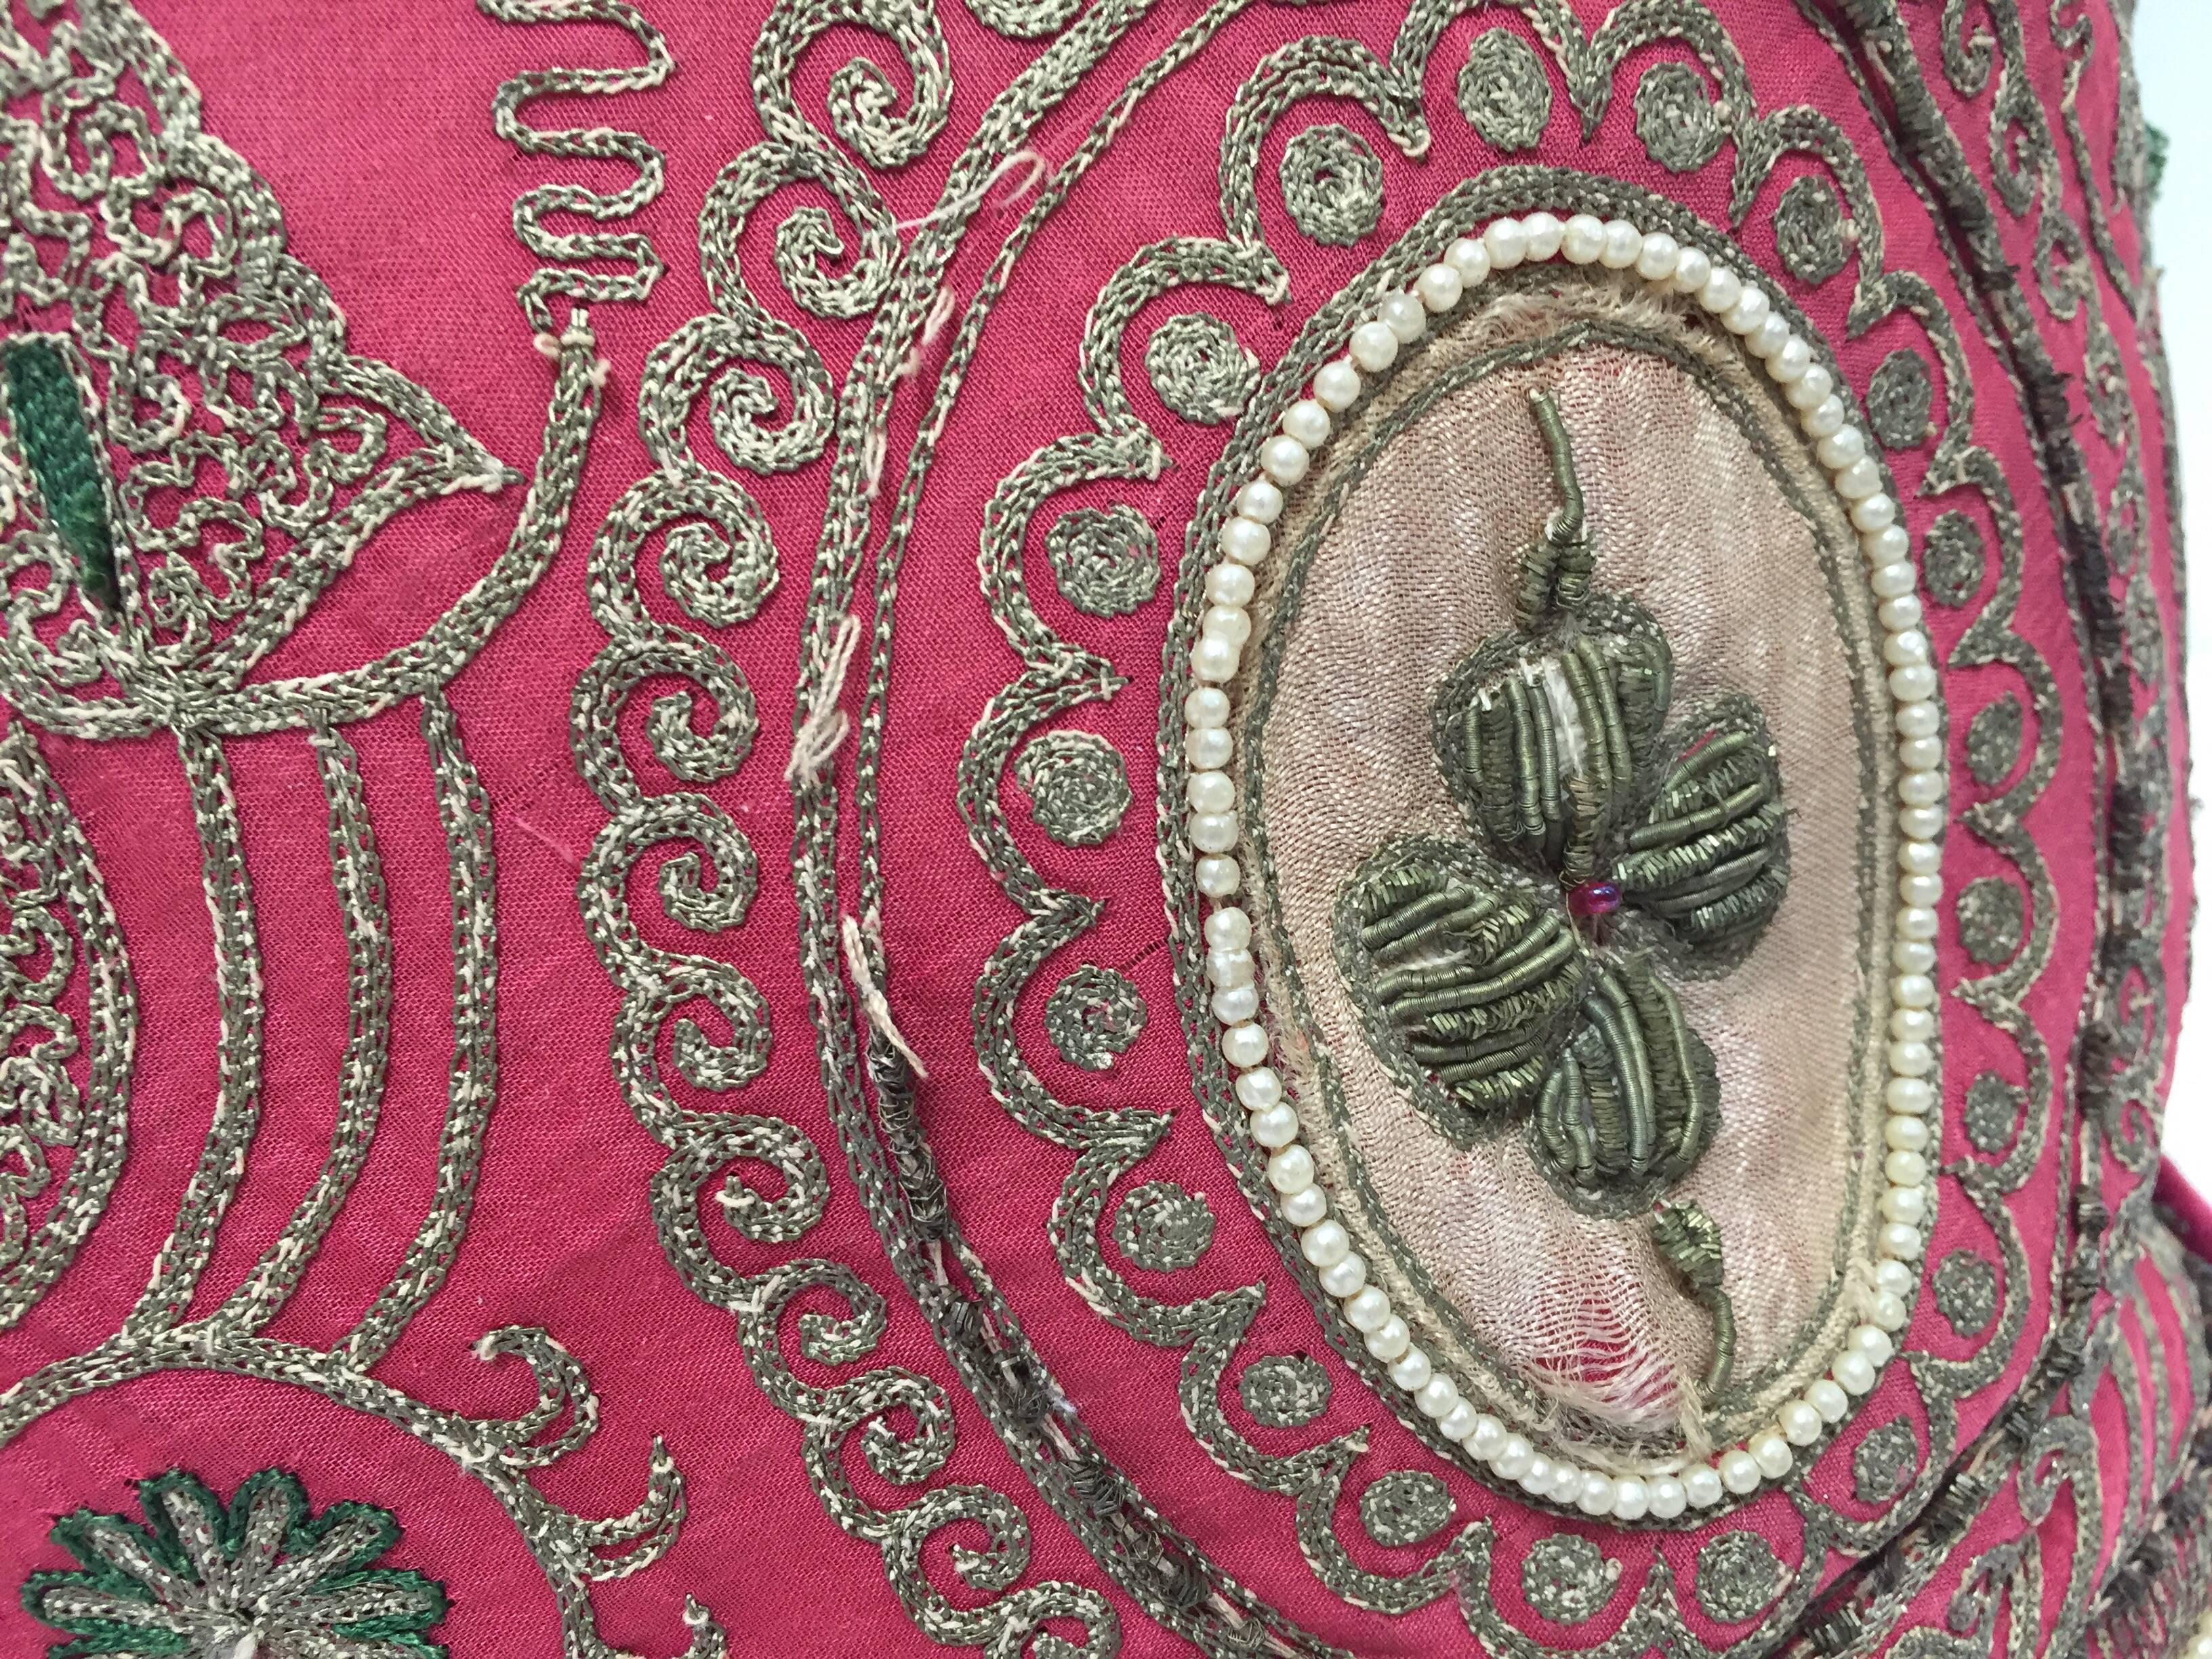 Antique Turkish Ottoman Silk Pillows with Metallic Threads a Pair 2